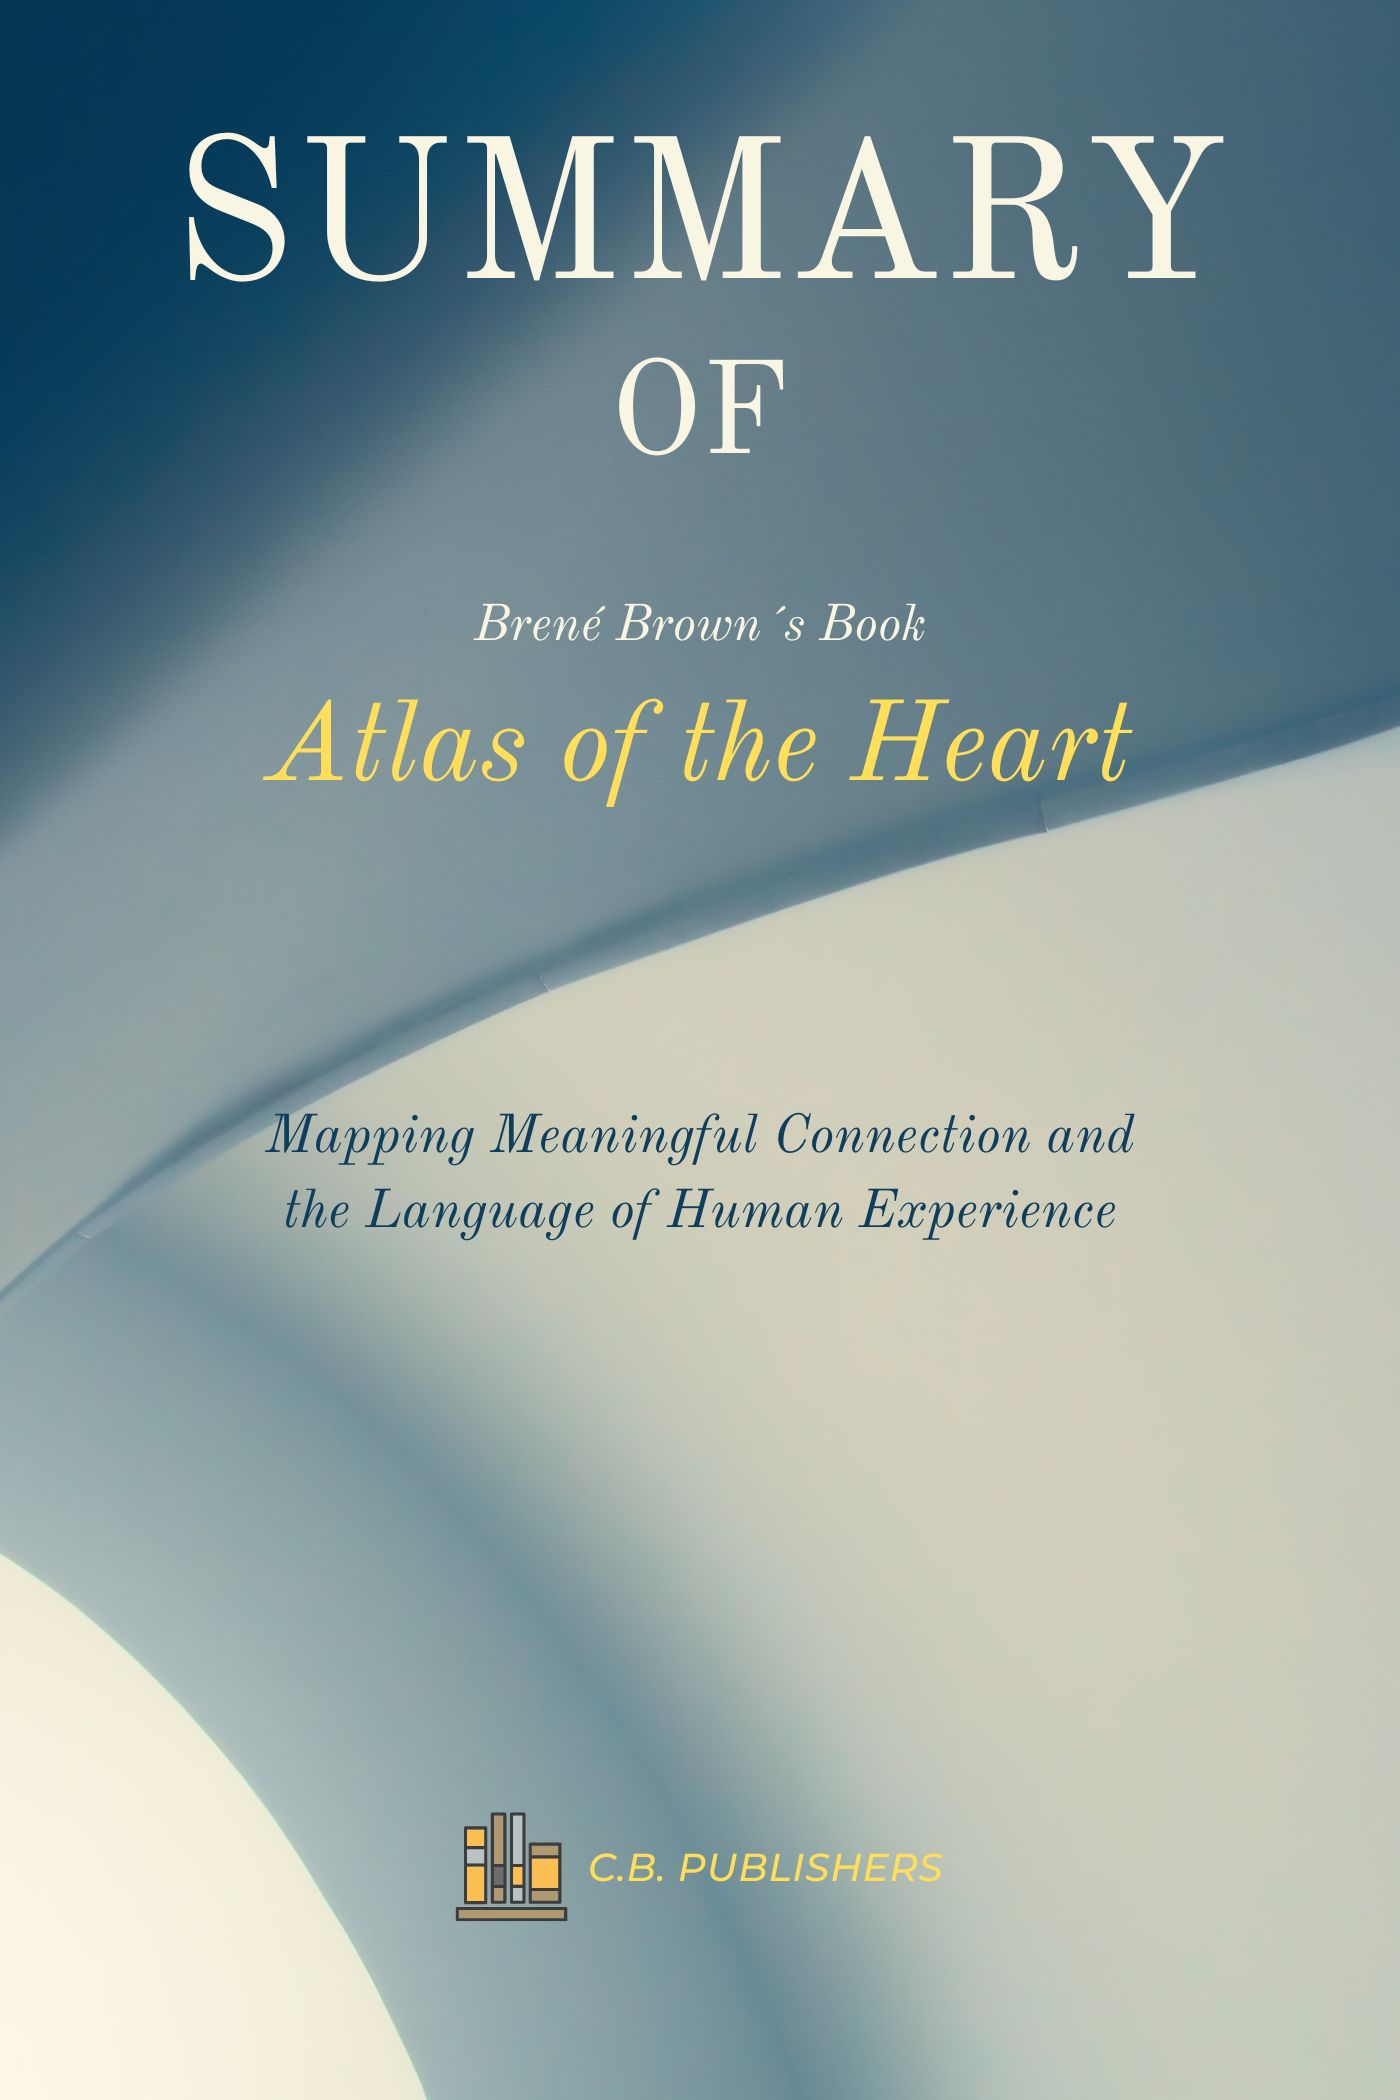 Atlas of the Heart Summary